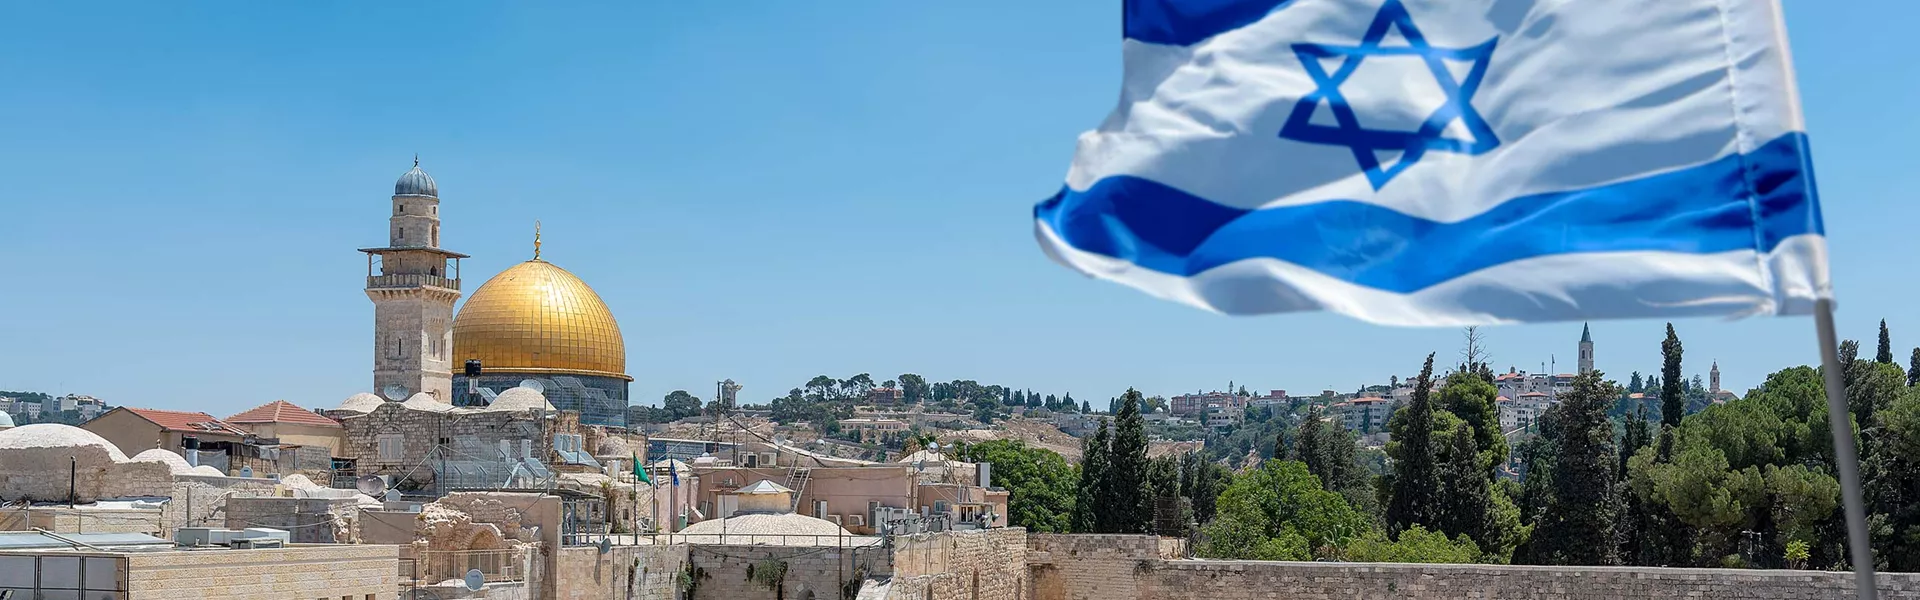 Western wall of Jerusalem - religious Israel highlight